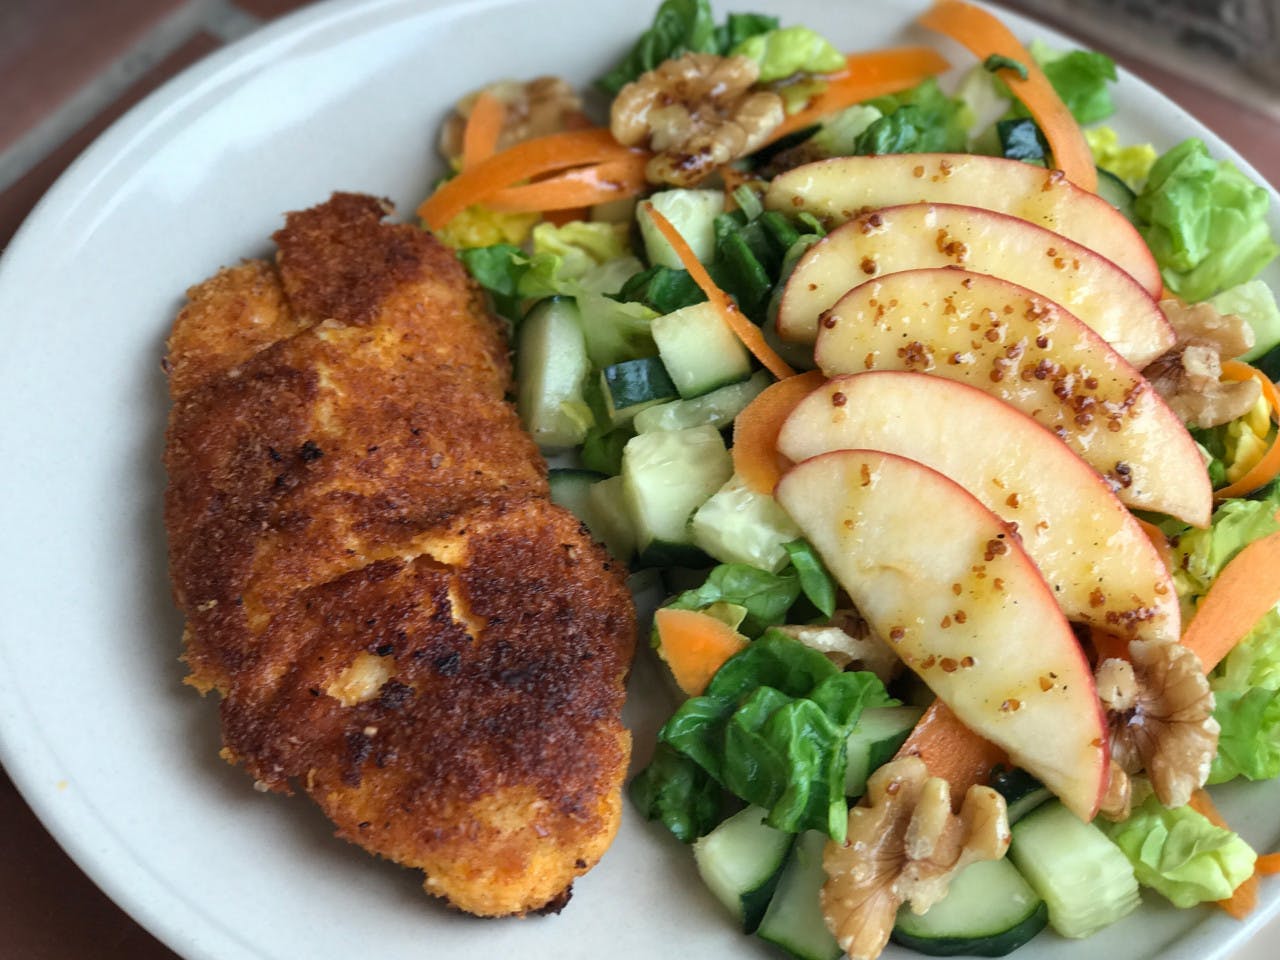 Crispy chicken with apple salad